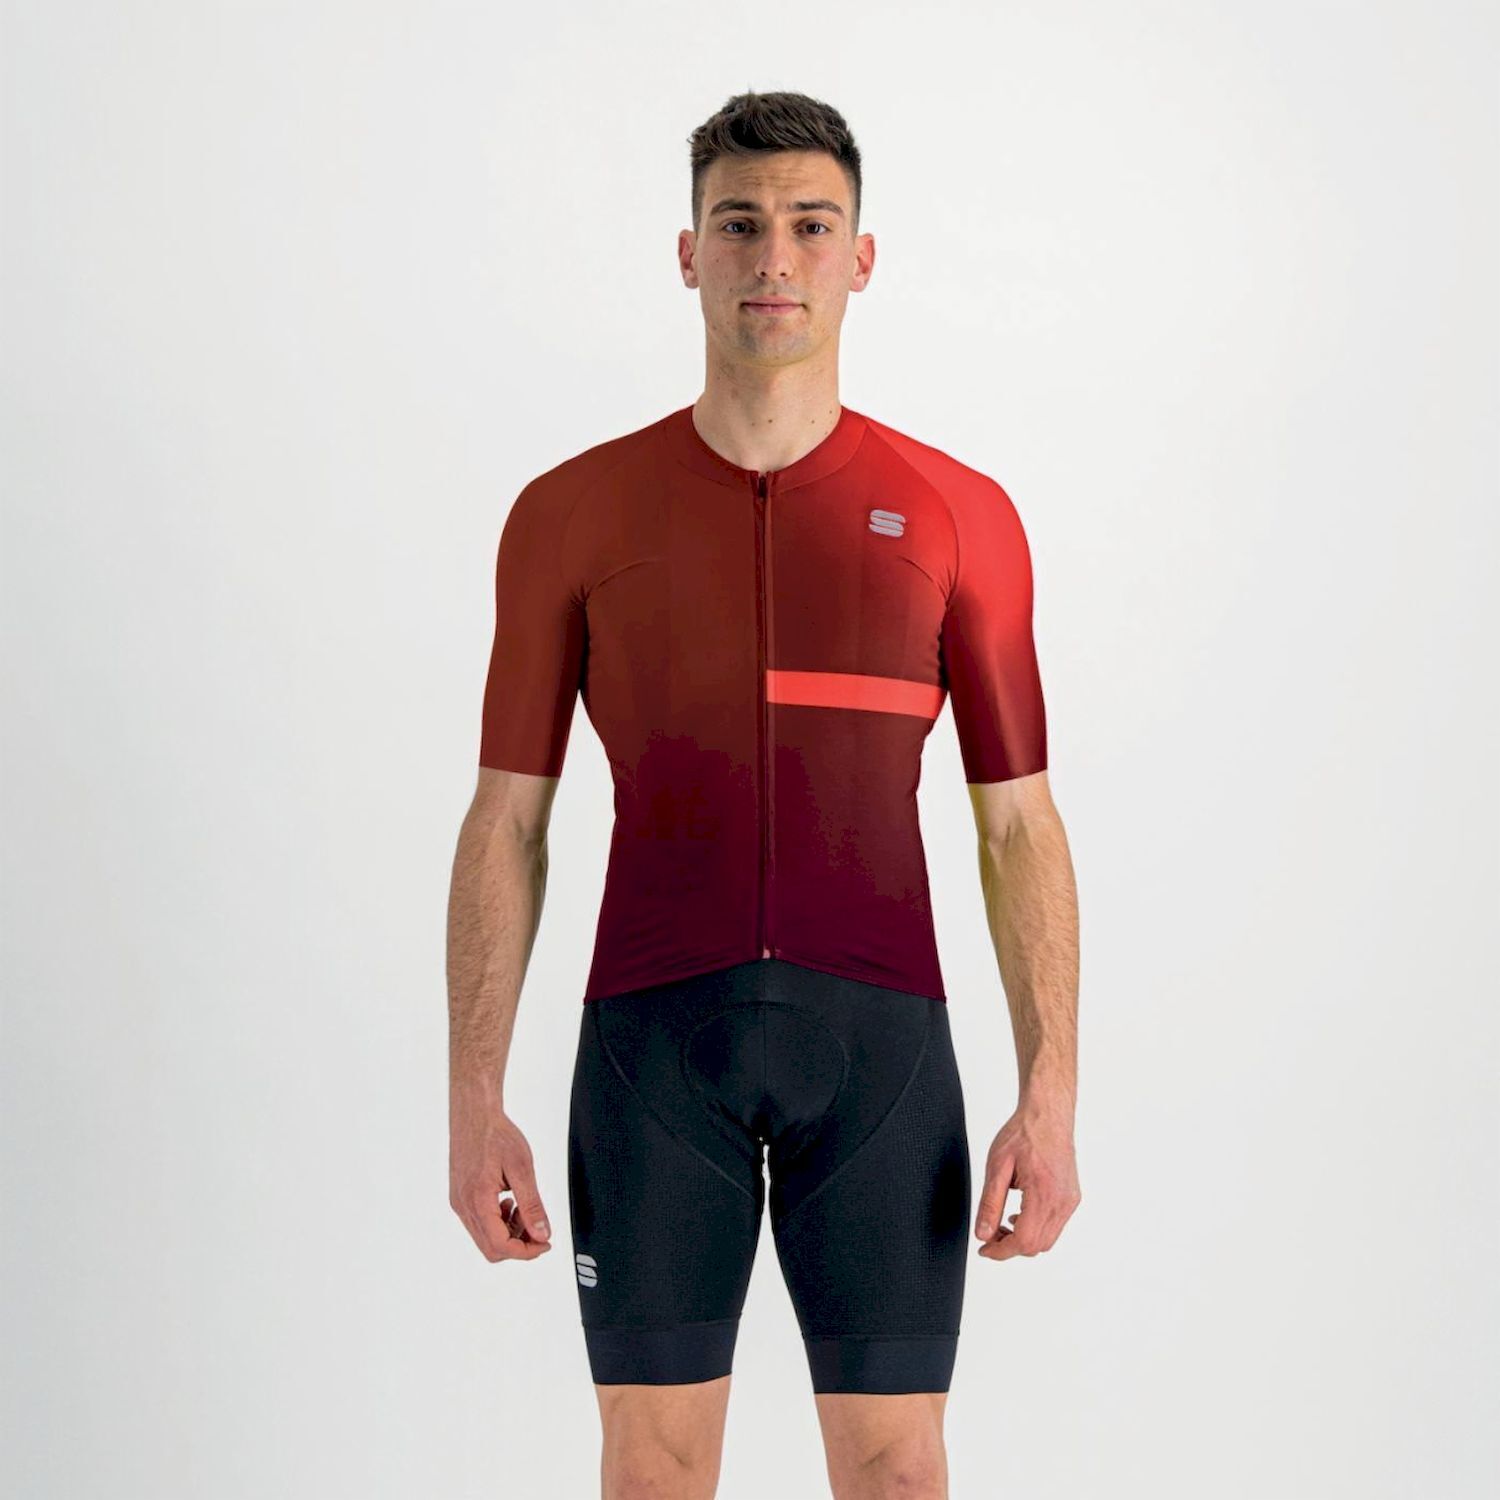 Sportful Bomber Jersey - Cycling jersey - Men's